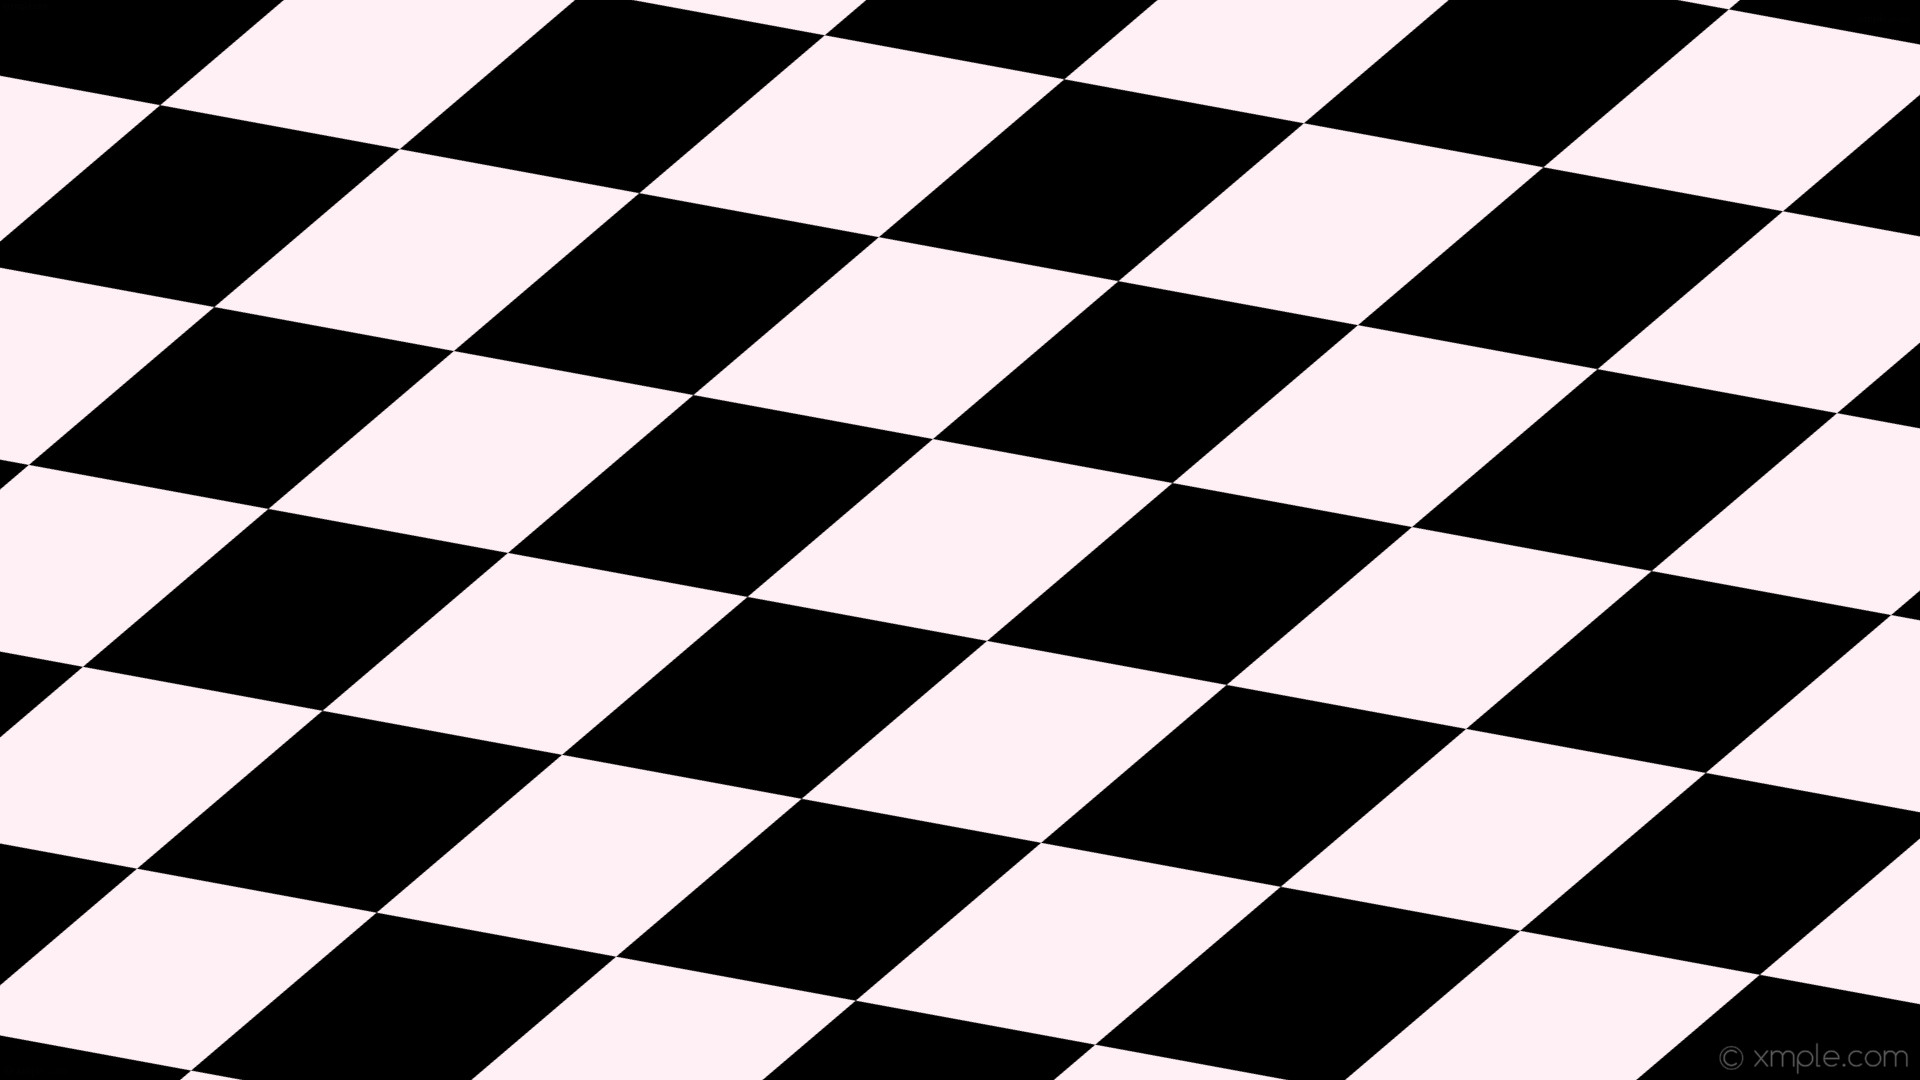 1920x1080 wallpaper lozenge black white diamond rhombus lavender blush #fff0f5  #000000 15Â° 440px 209px